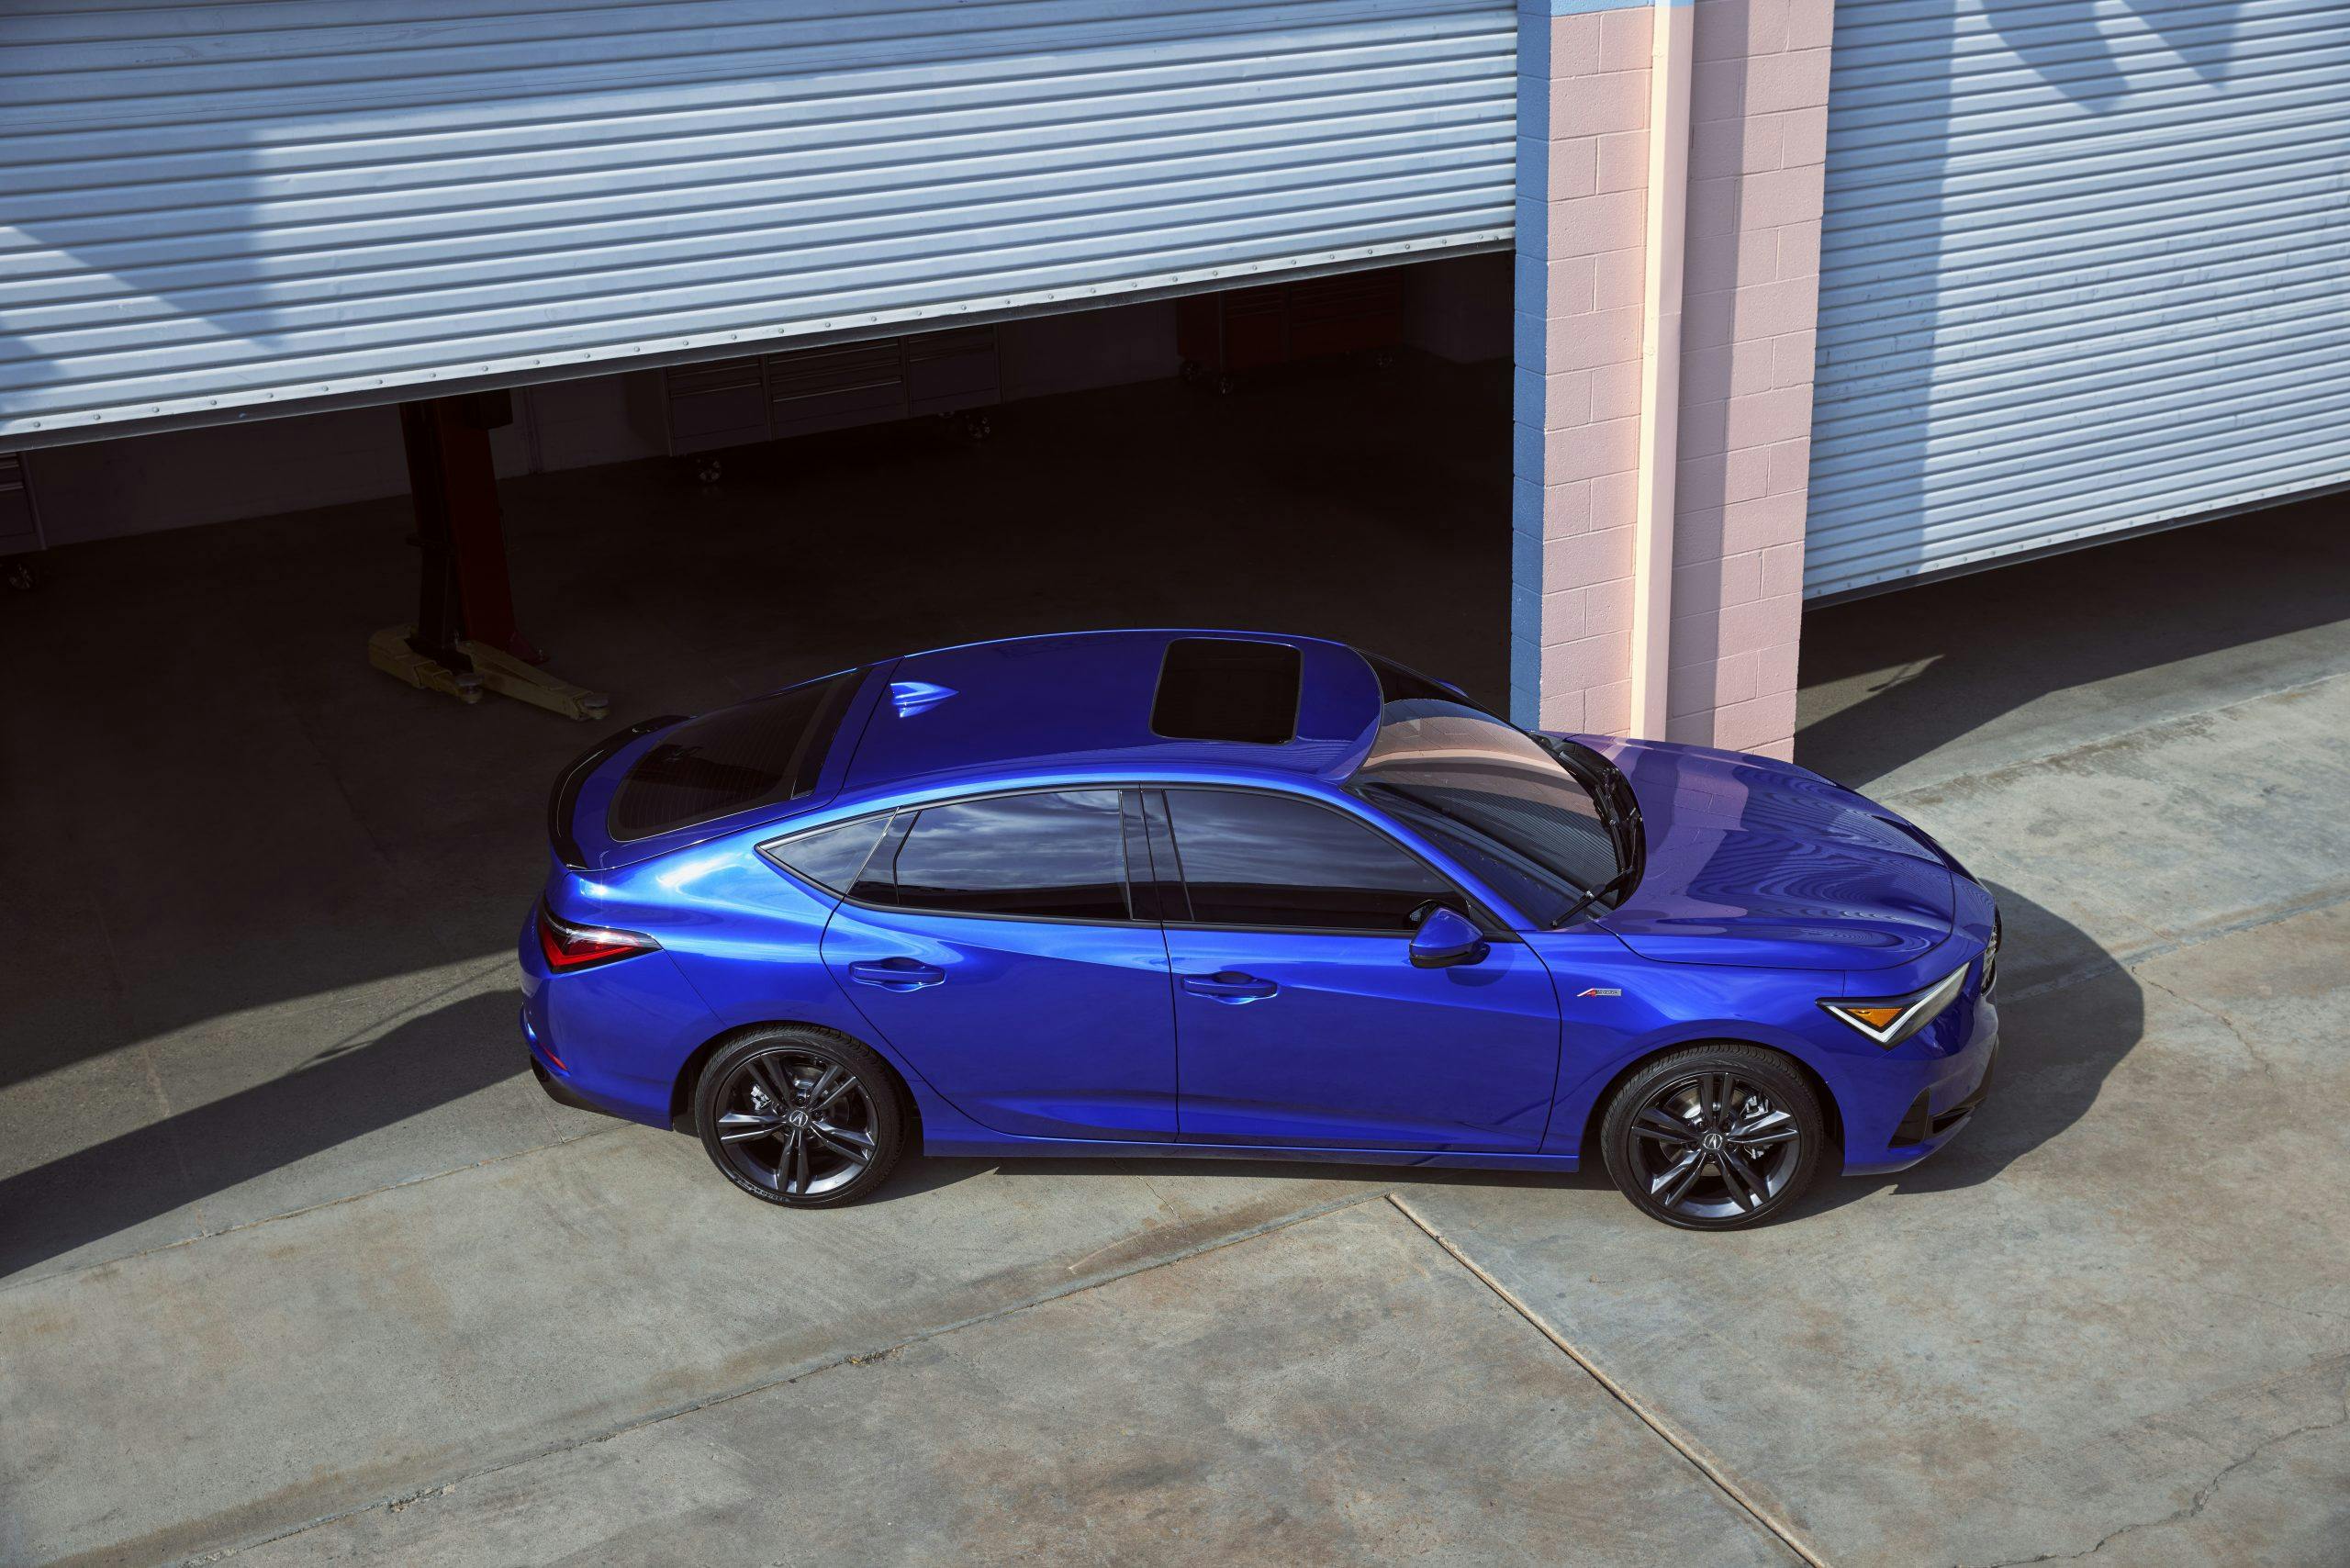 2023 Acura Integra exterior blue high side profile